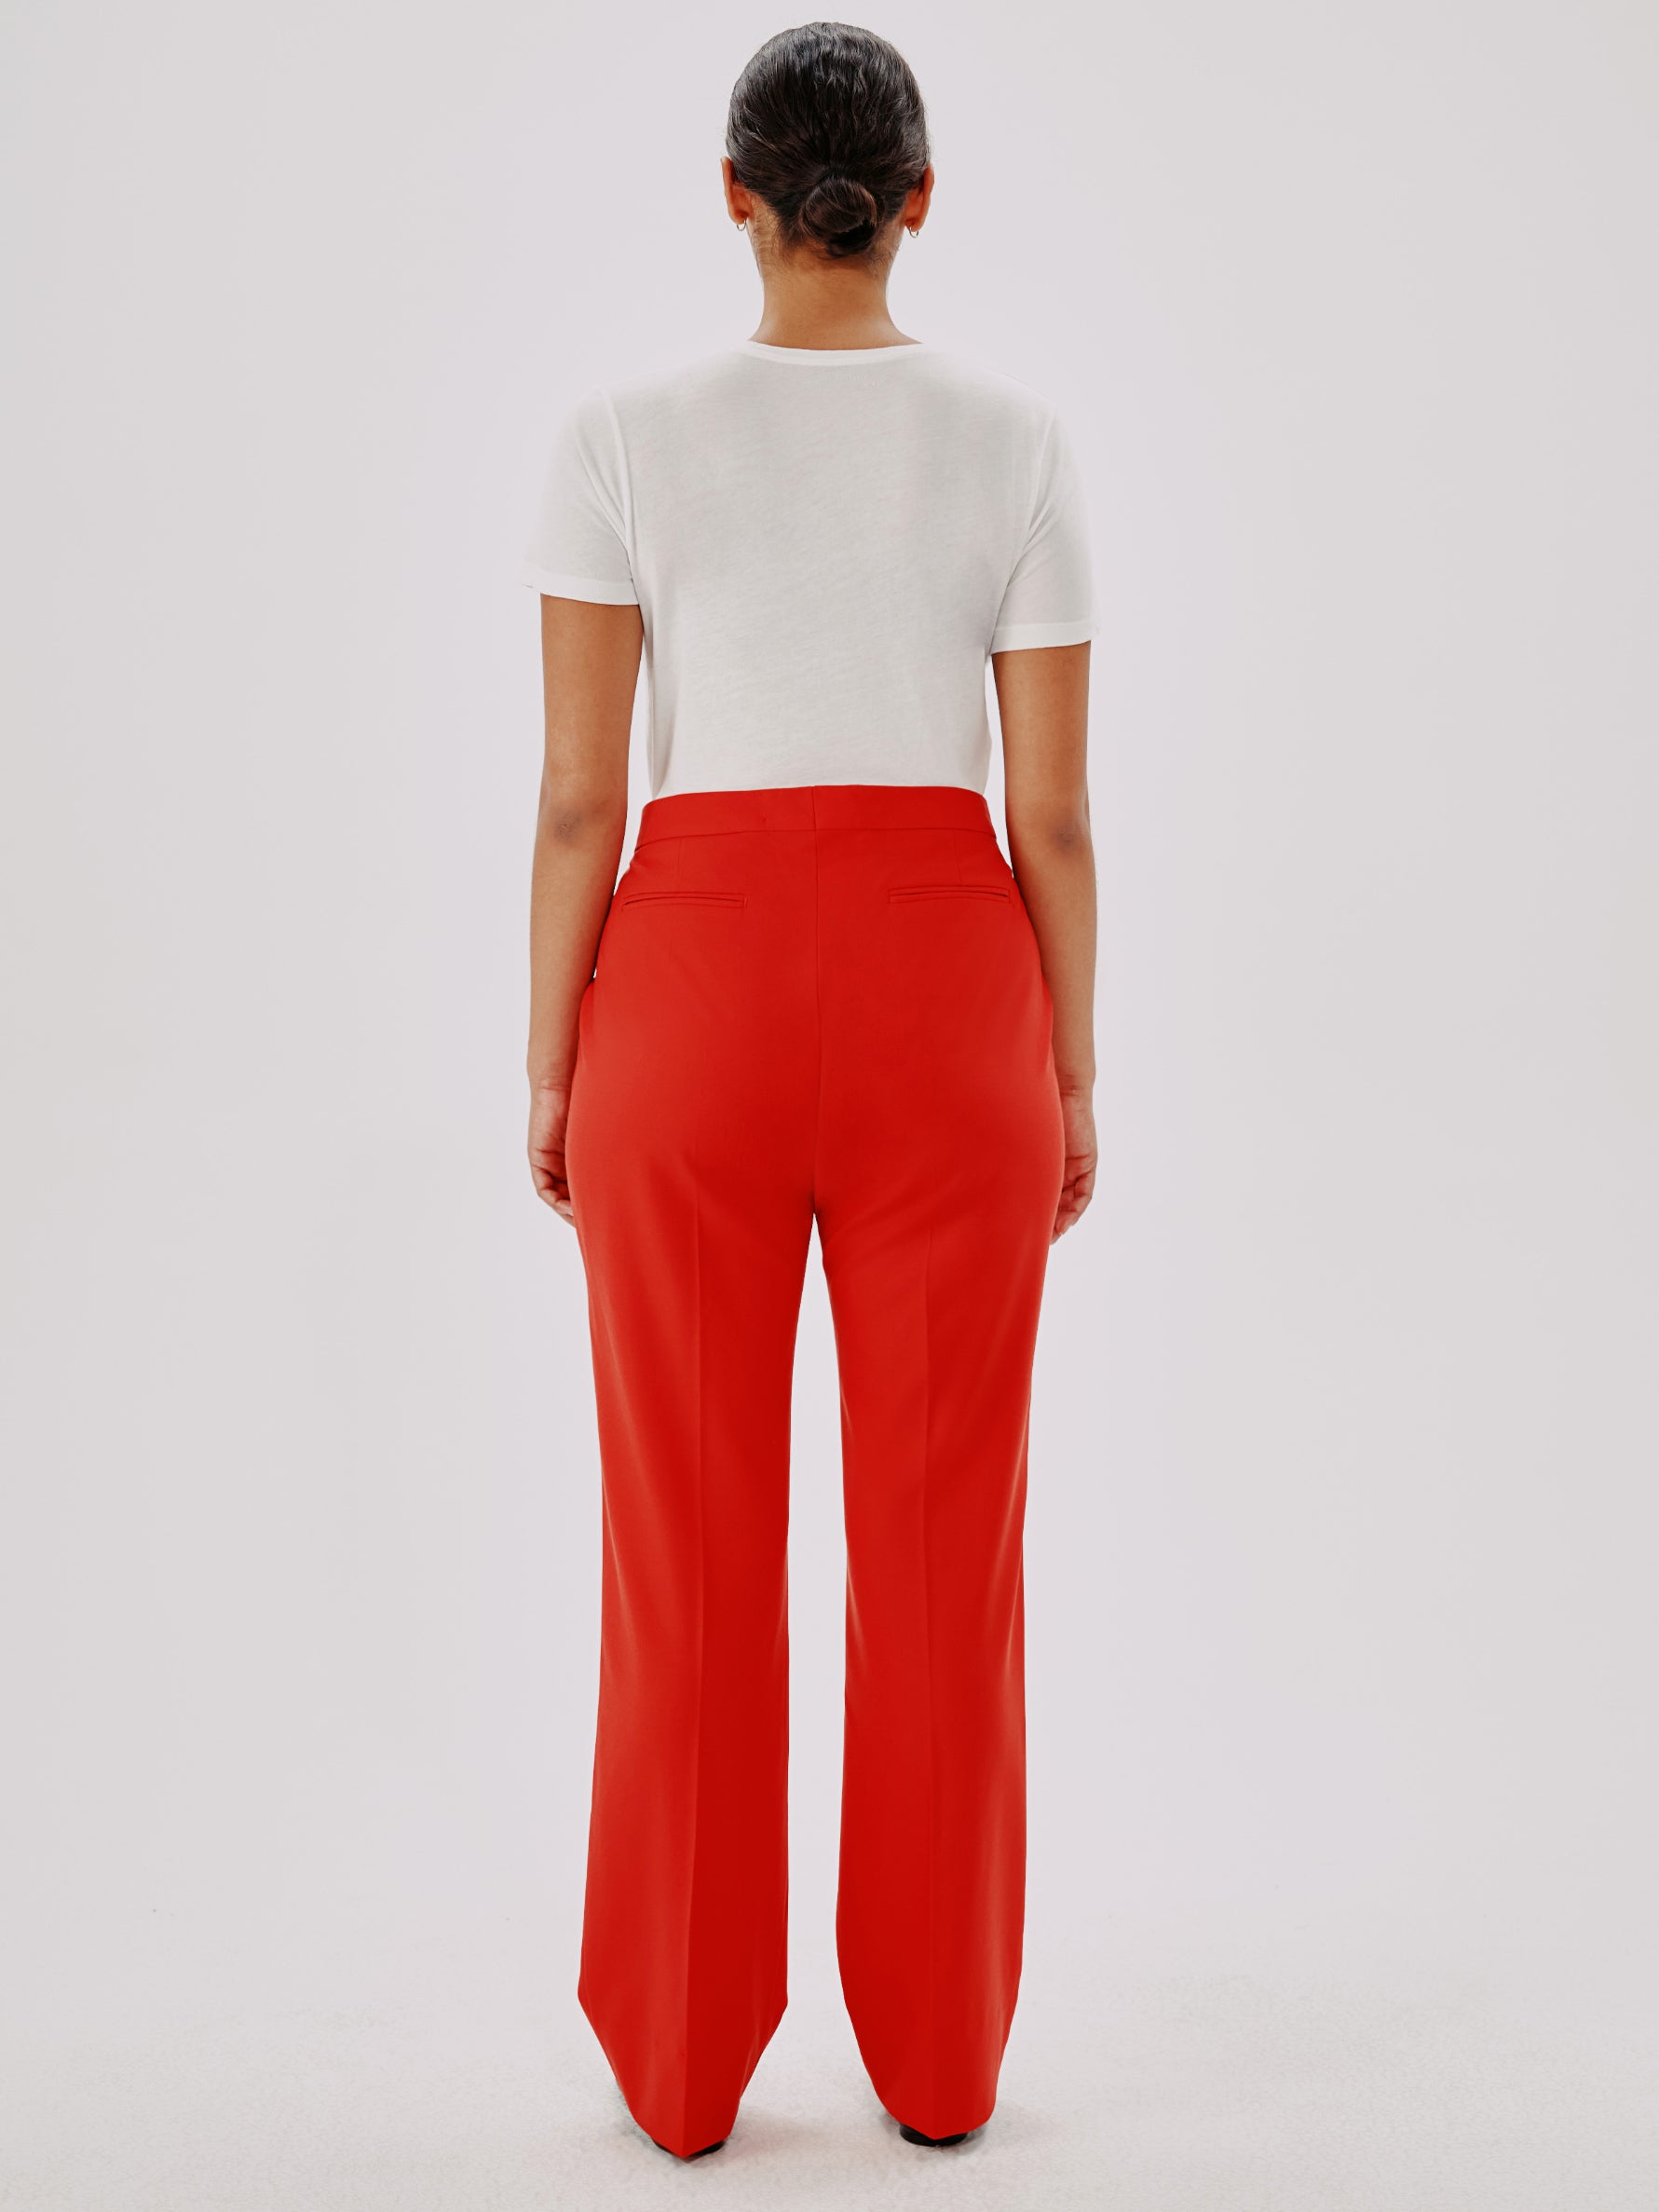 Red Palazzo pants | Womens fashion by Sandhya Garg